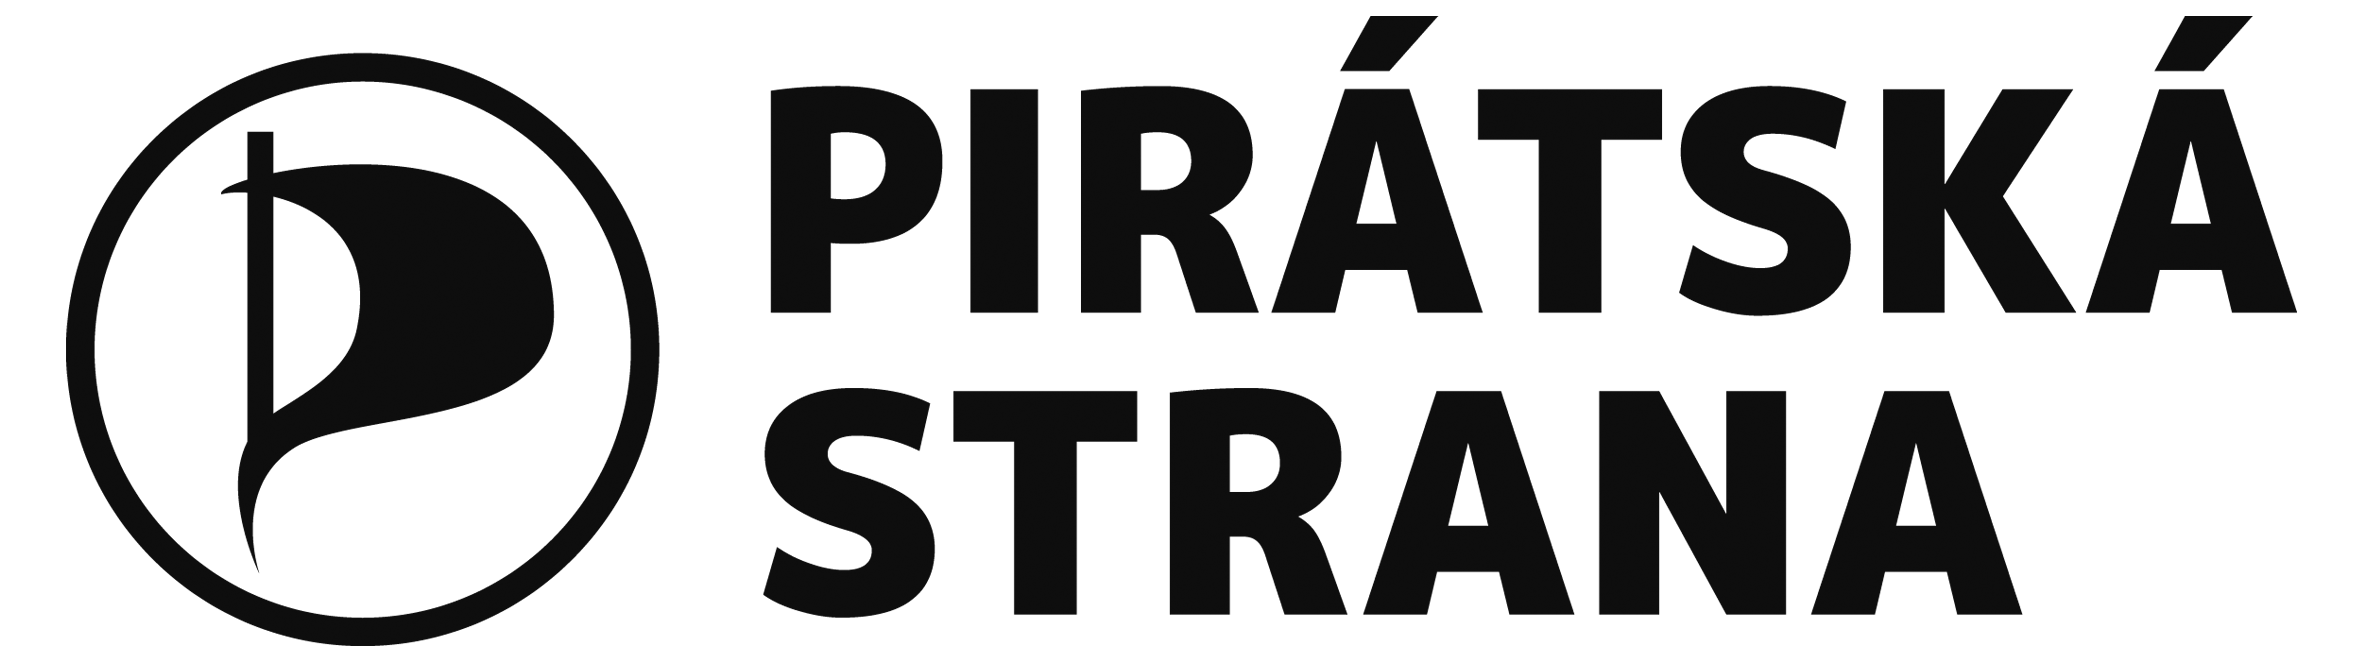 Pirati.cz